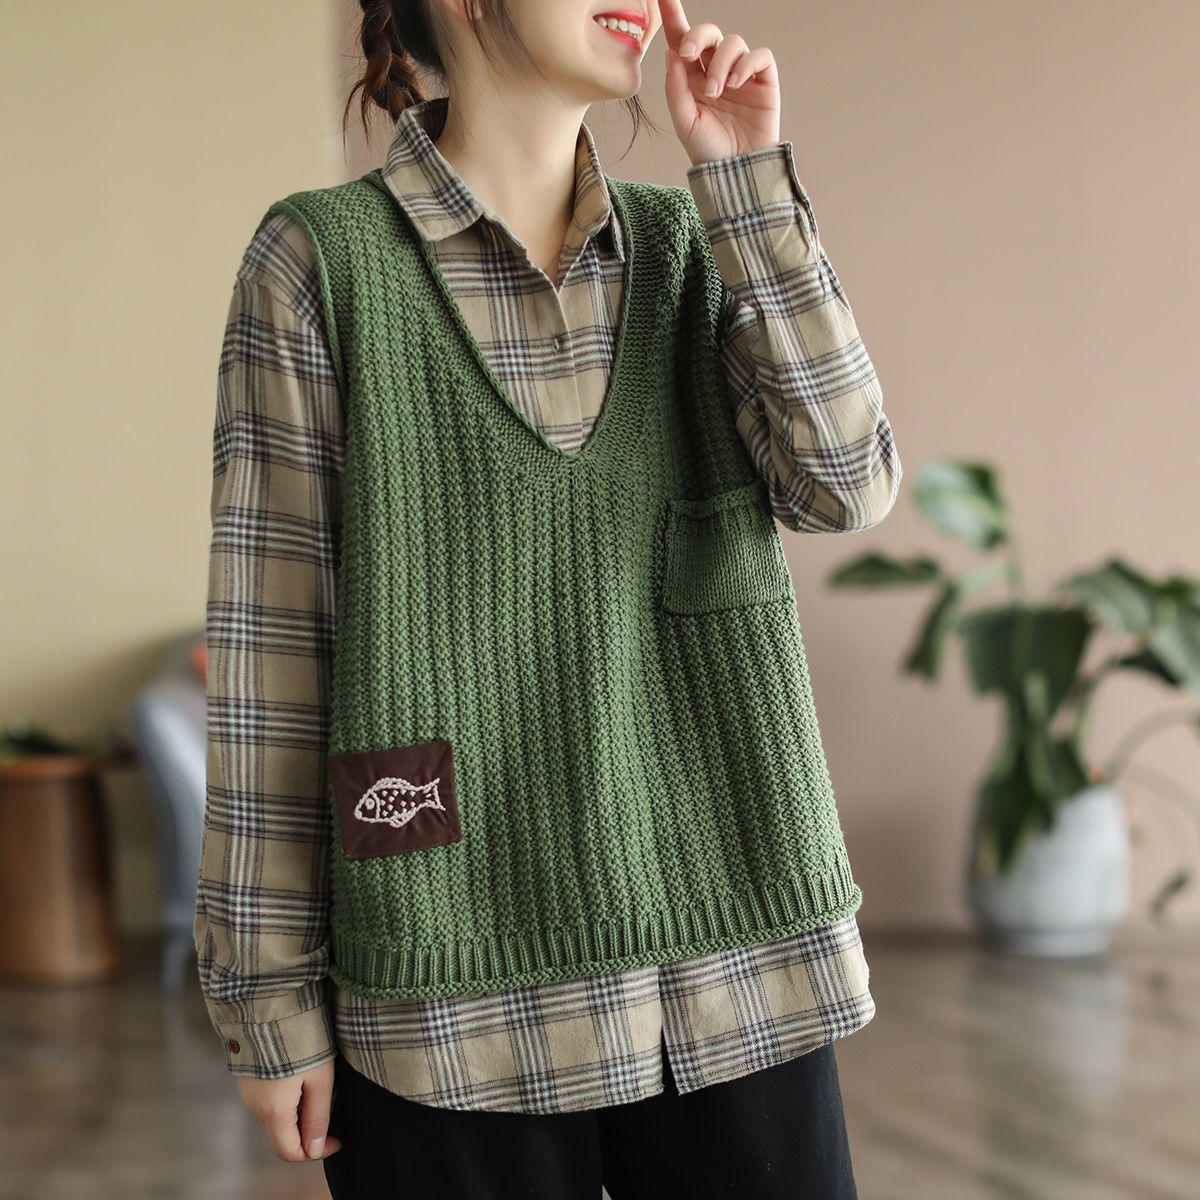 Cotton vest vest women's knitted  autumn new all-match outerwear V-neck loose vest